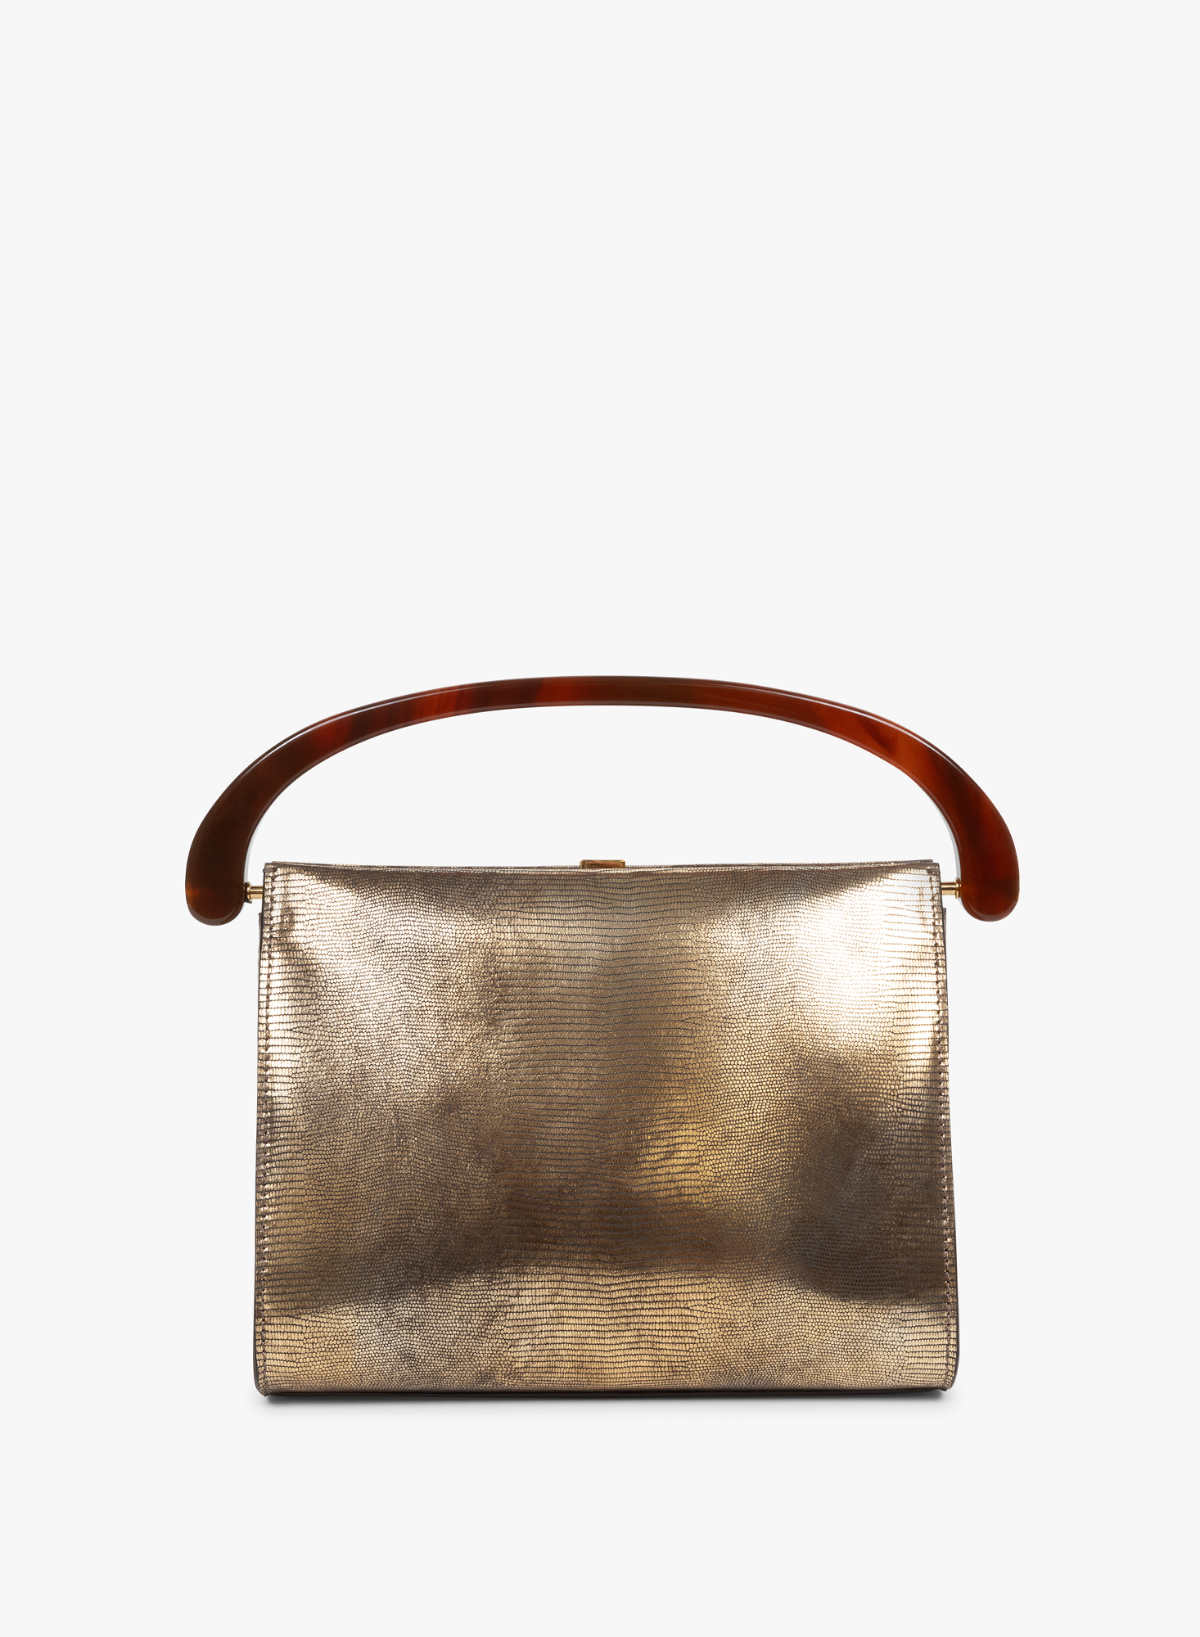 Dries Van Noten's Handbag For Spring Summer 2024: The Crisp